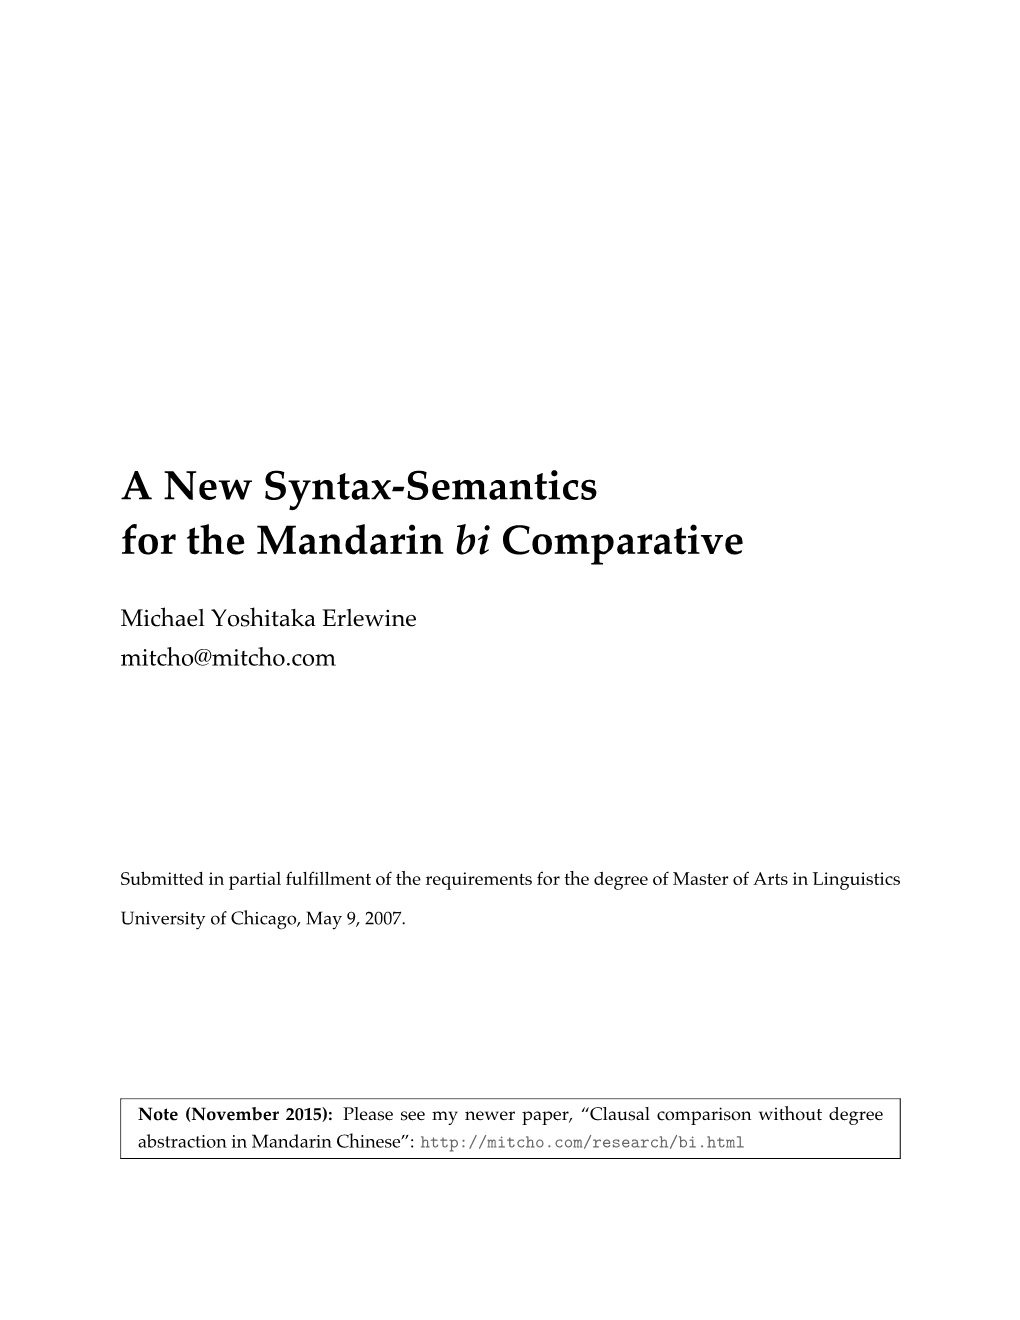 A New Syntax-Semantics for the Mandarin Bi Comparative